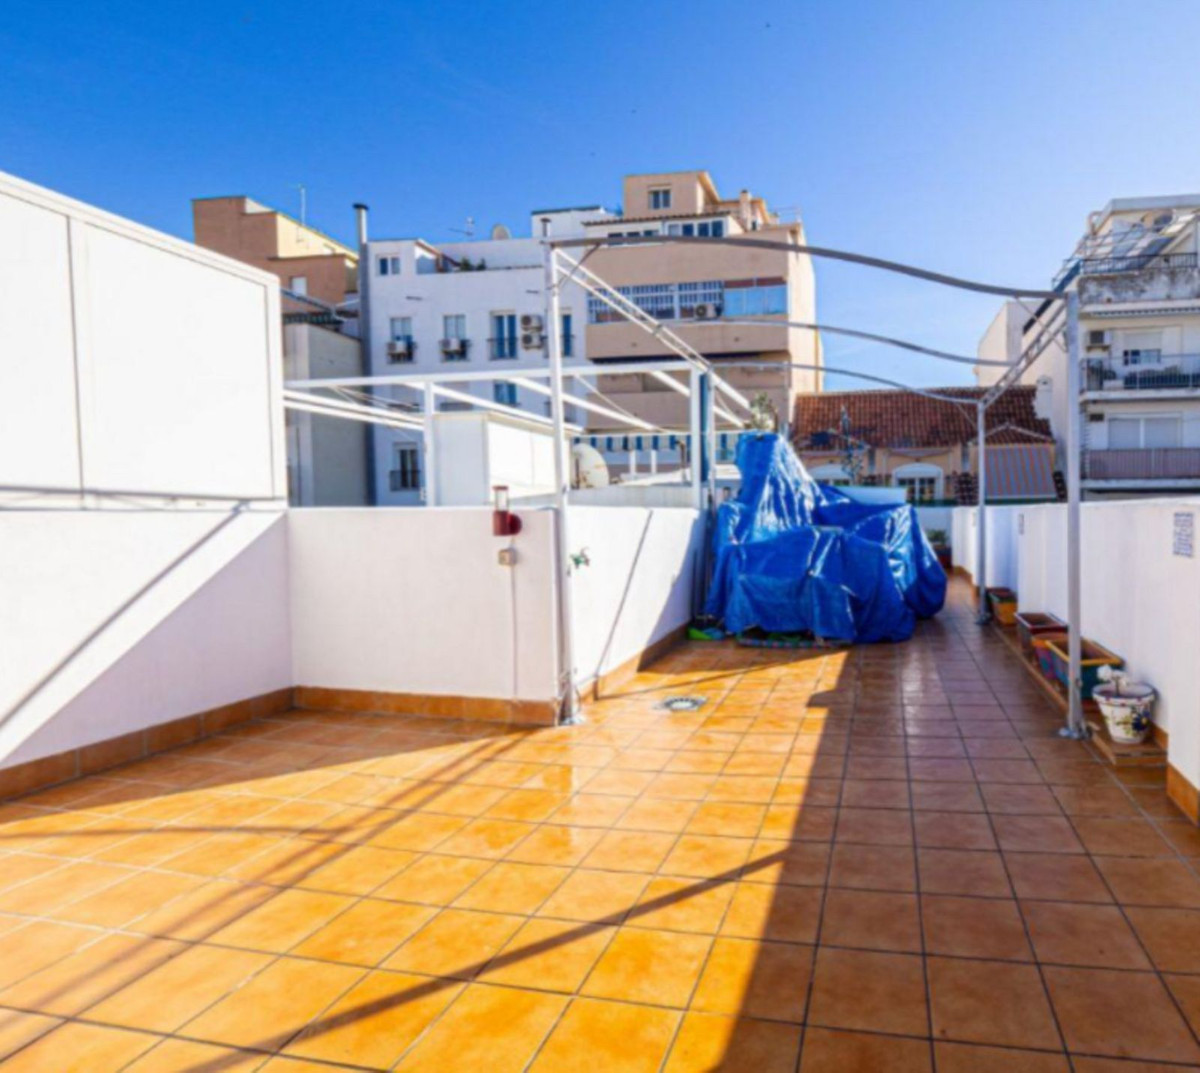 1 bedroom Apartment For Sale in Fuengirola, Málaga - thumb 2